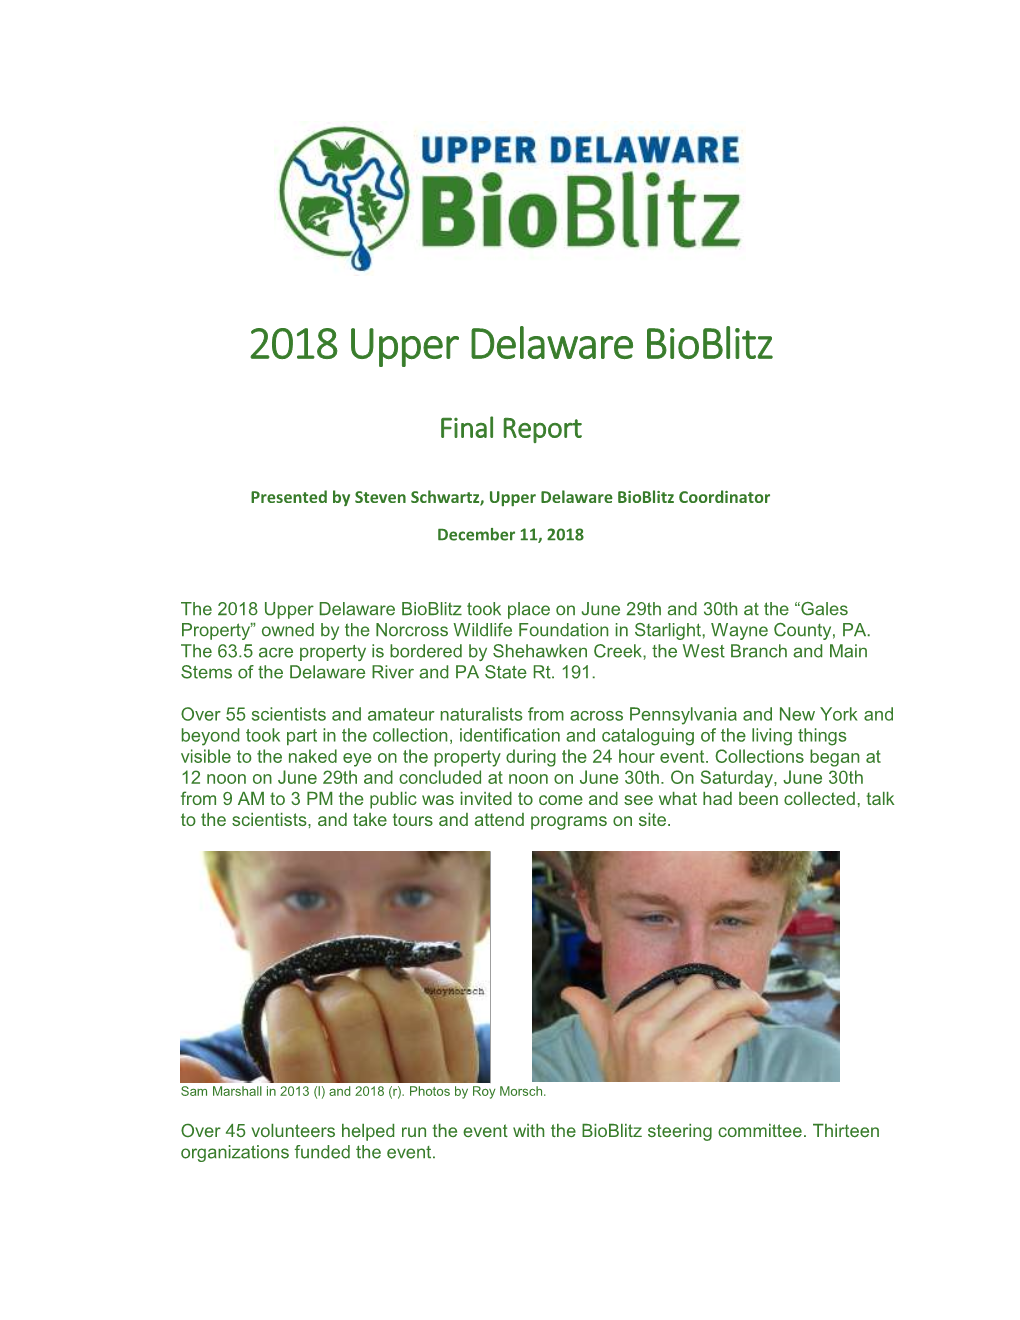 Final Report of the 2018 Upper Delaware Bioblitz